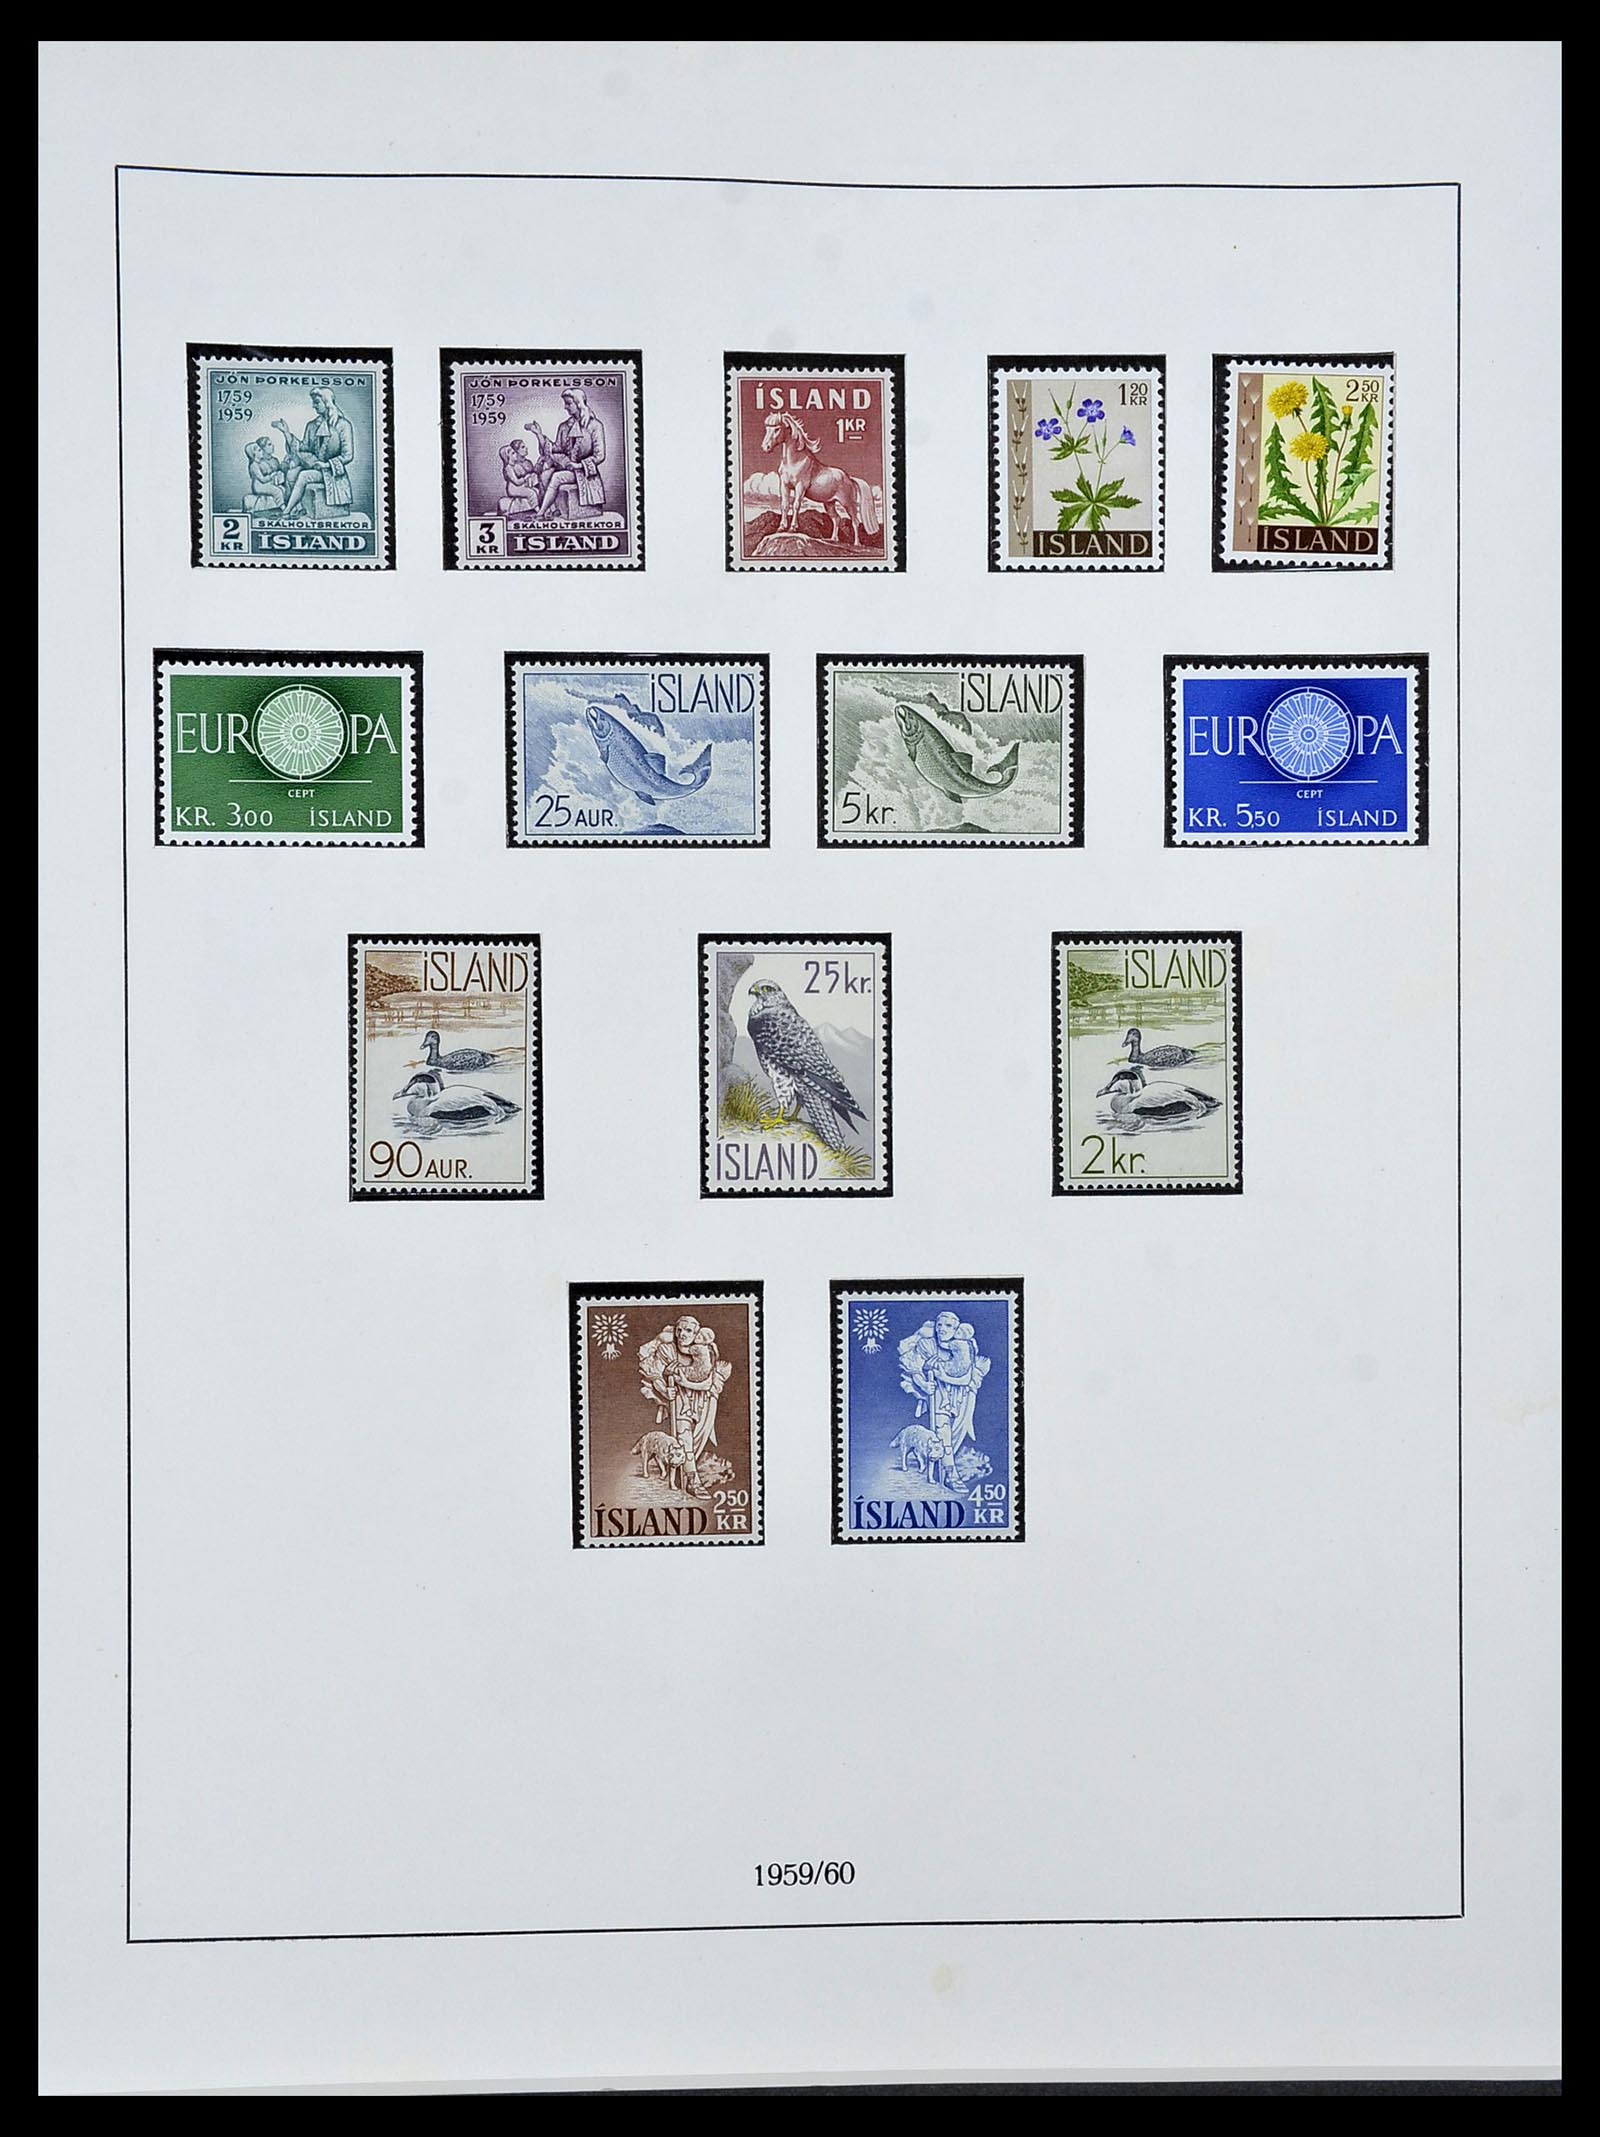 34313 054 - Stamp collection 34313 Scandinavia 1856-1990.